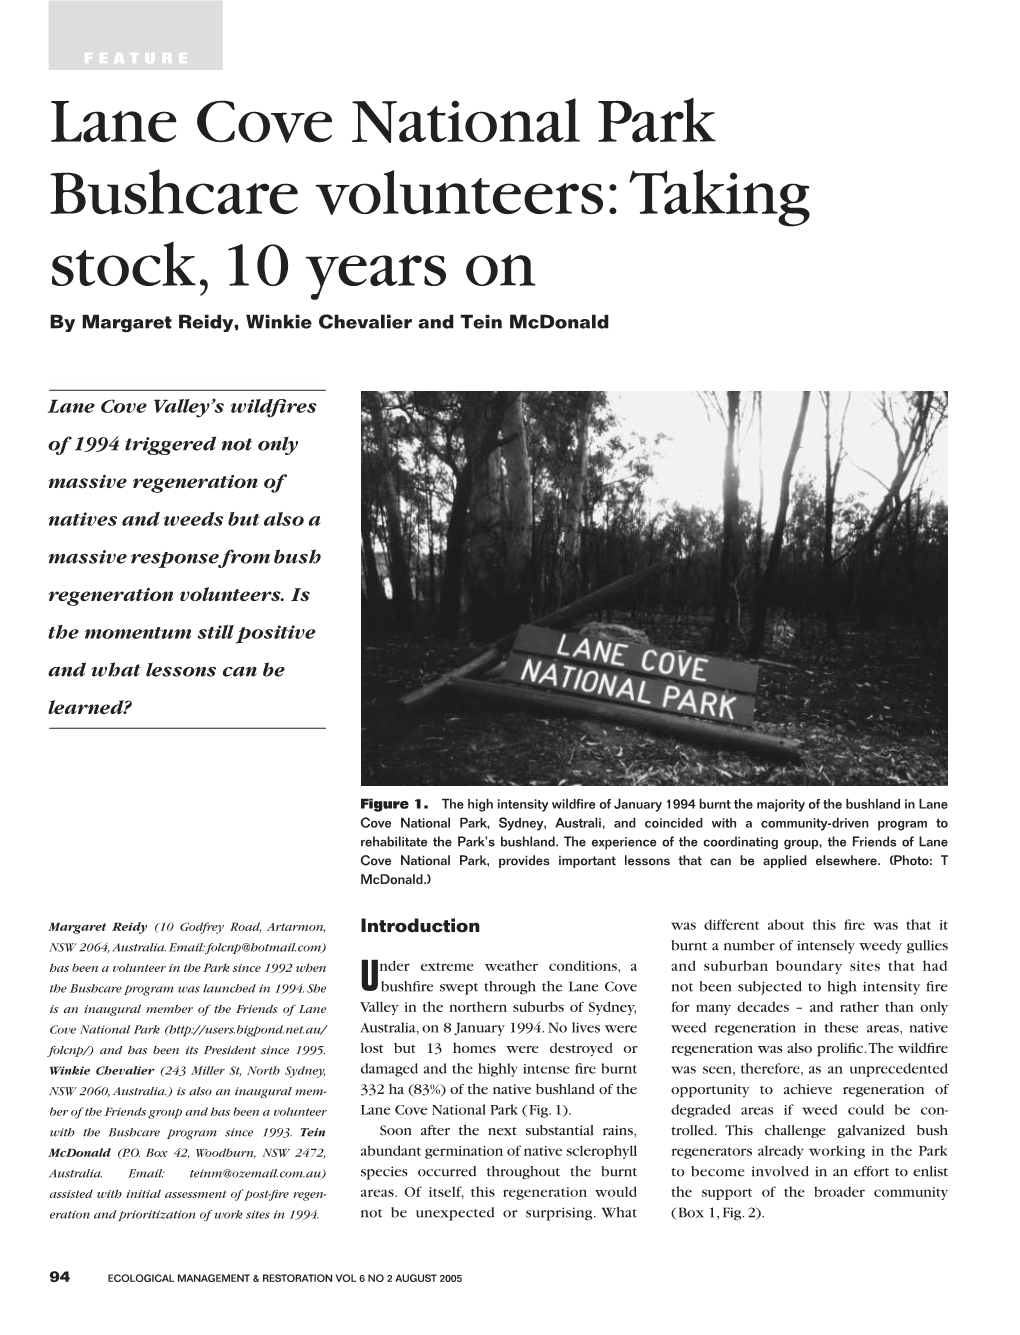 Lane Cove National Park Bushcare Volunteers